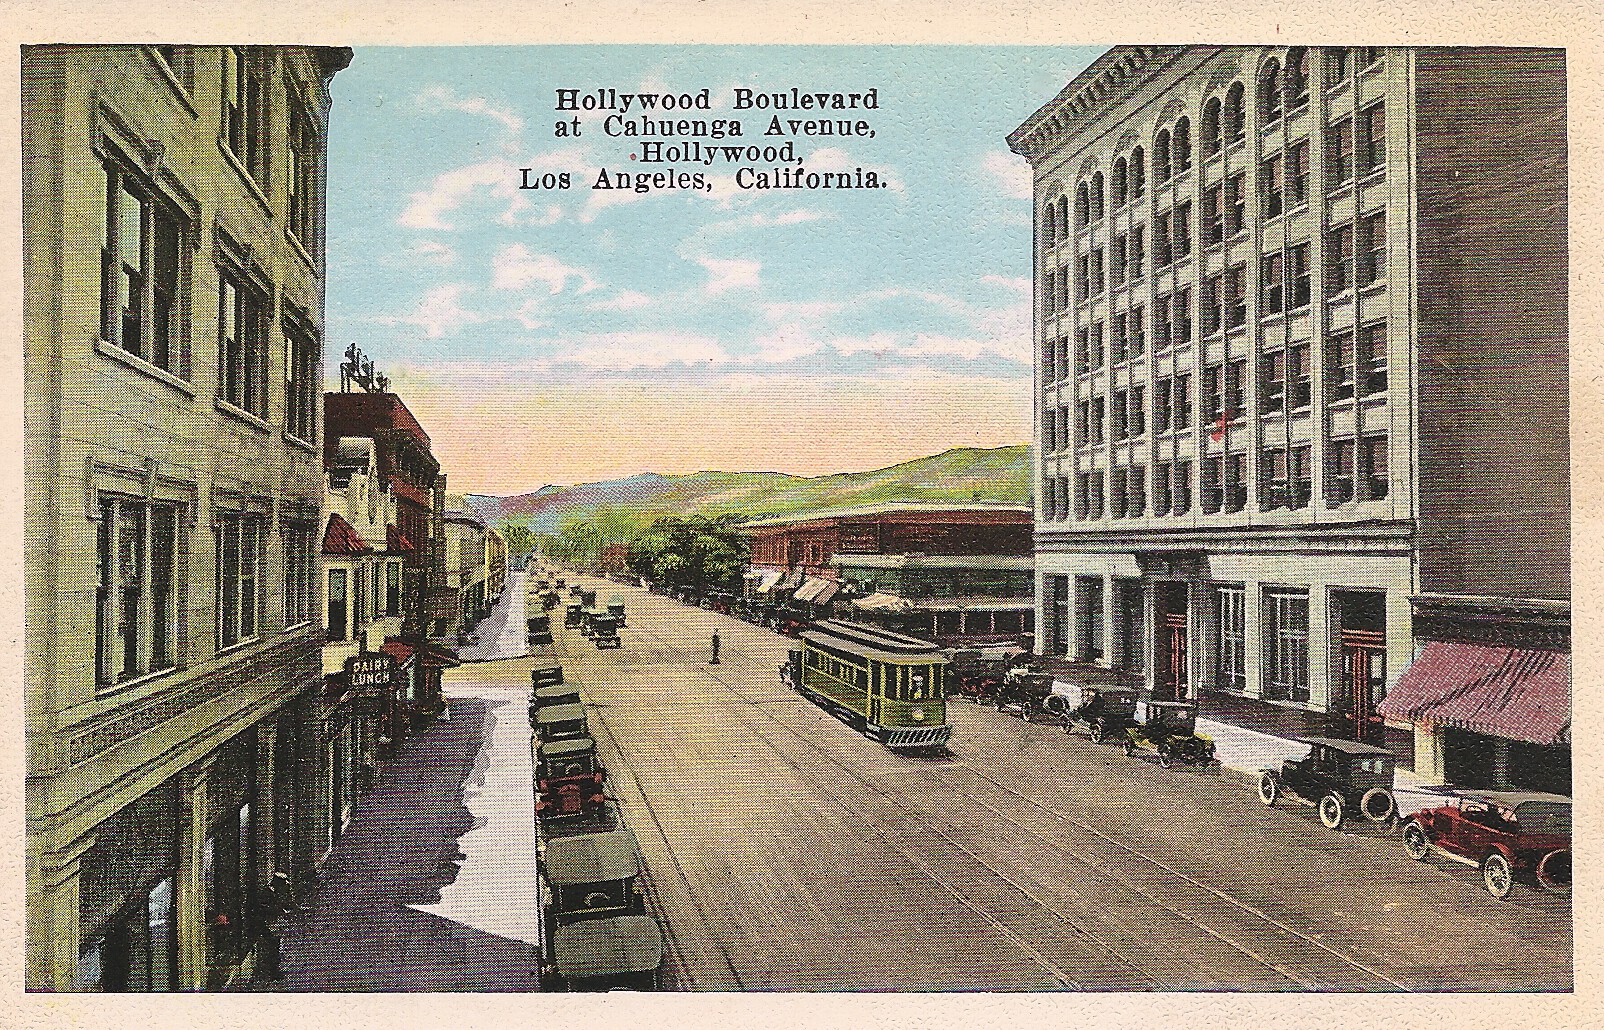 Hollywood Boulevard at Cahuenga Avenue looking west